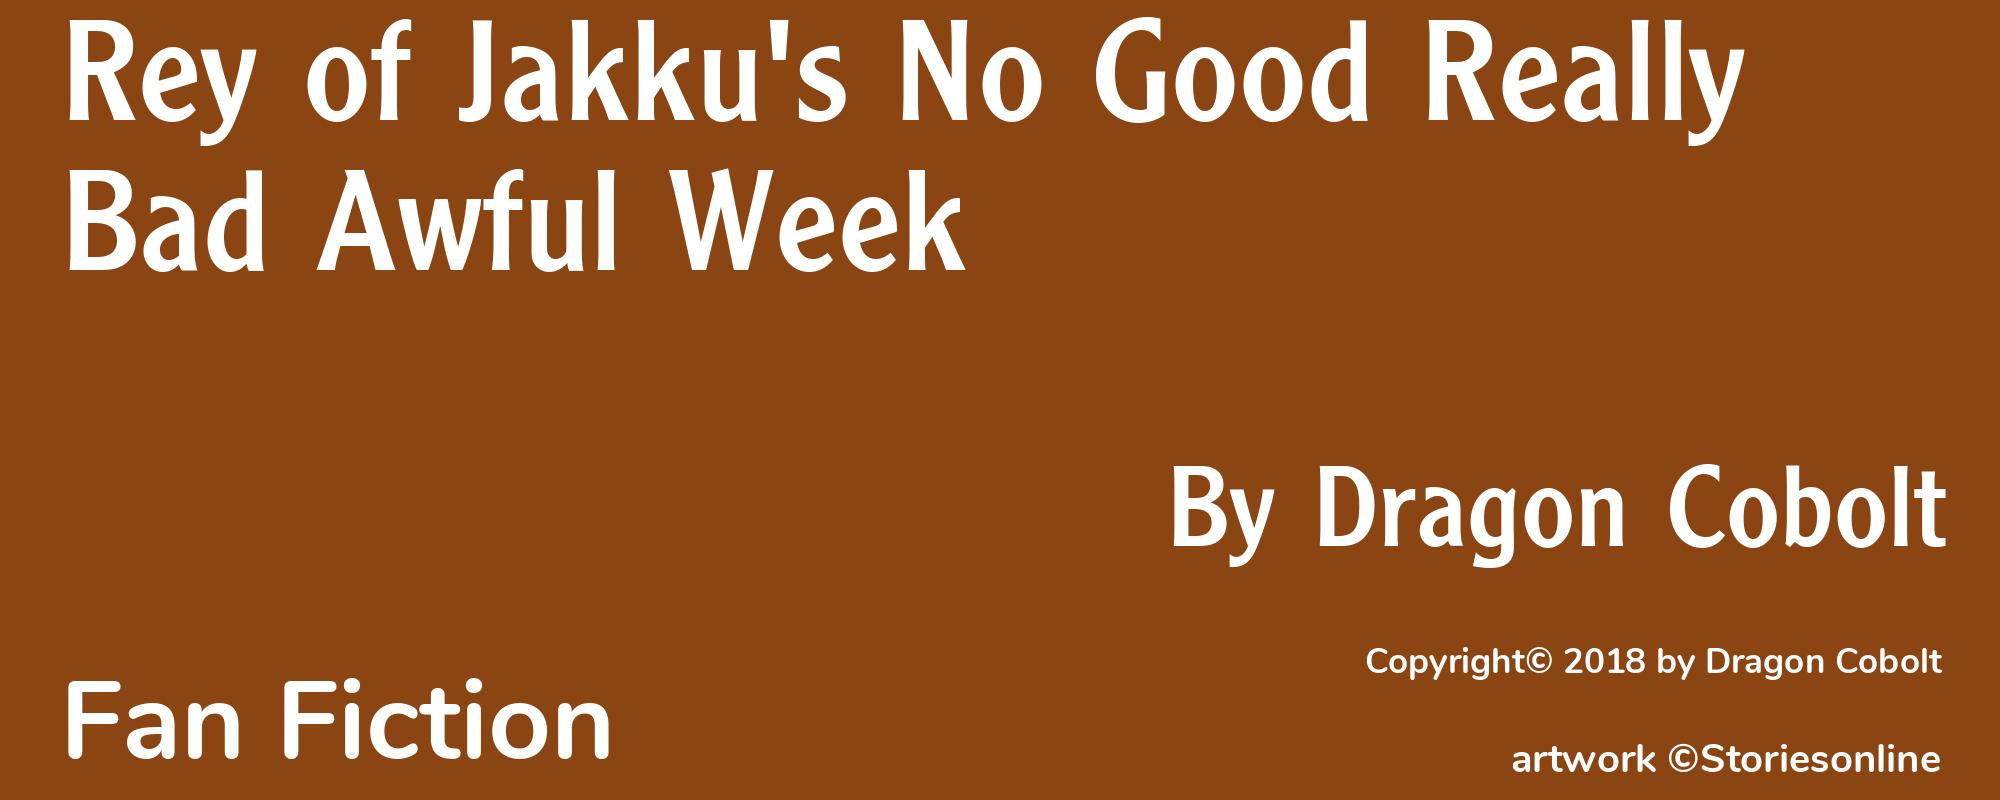 Rey of Jakku's No Good Really Bad Awful Week - Cover